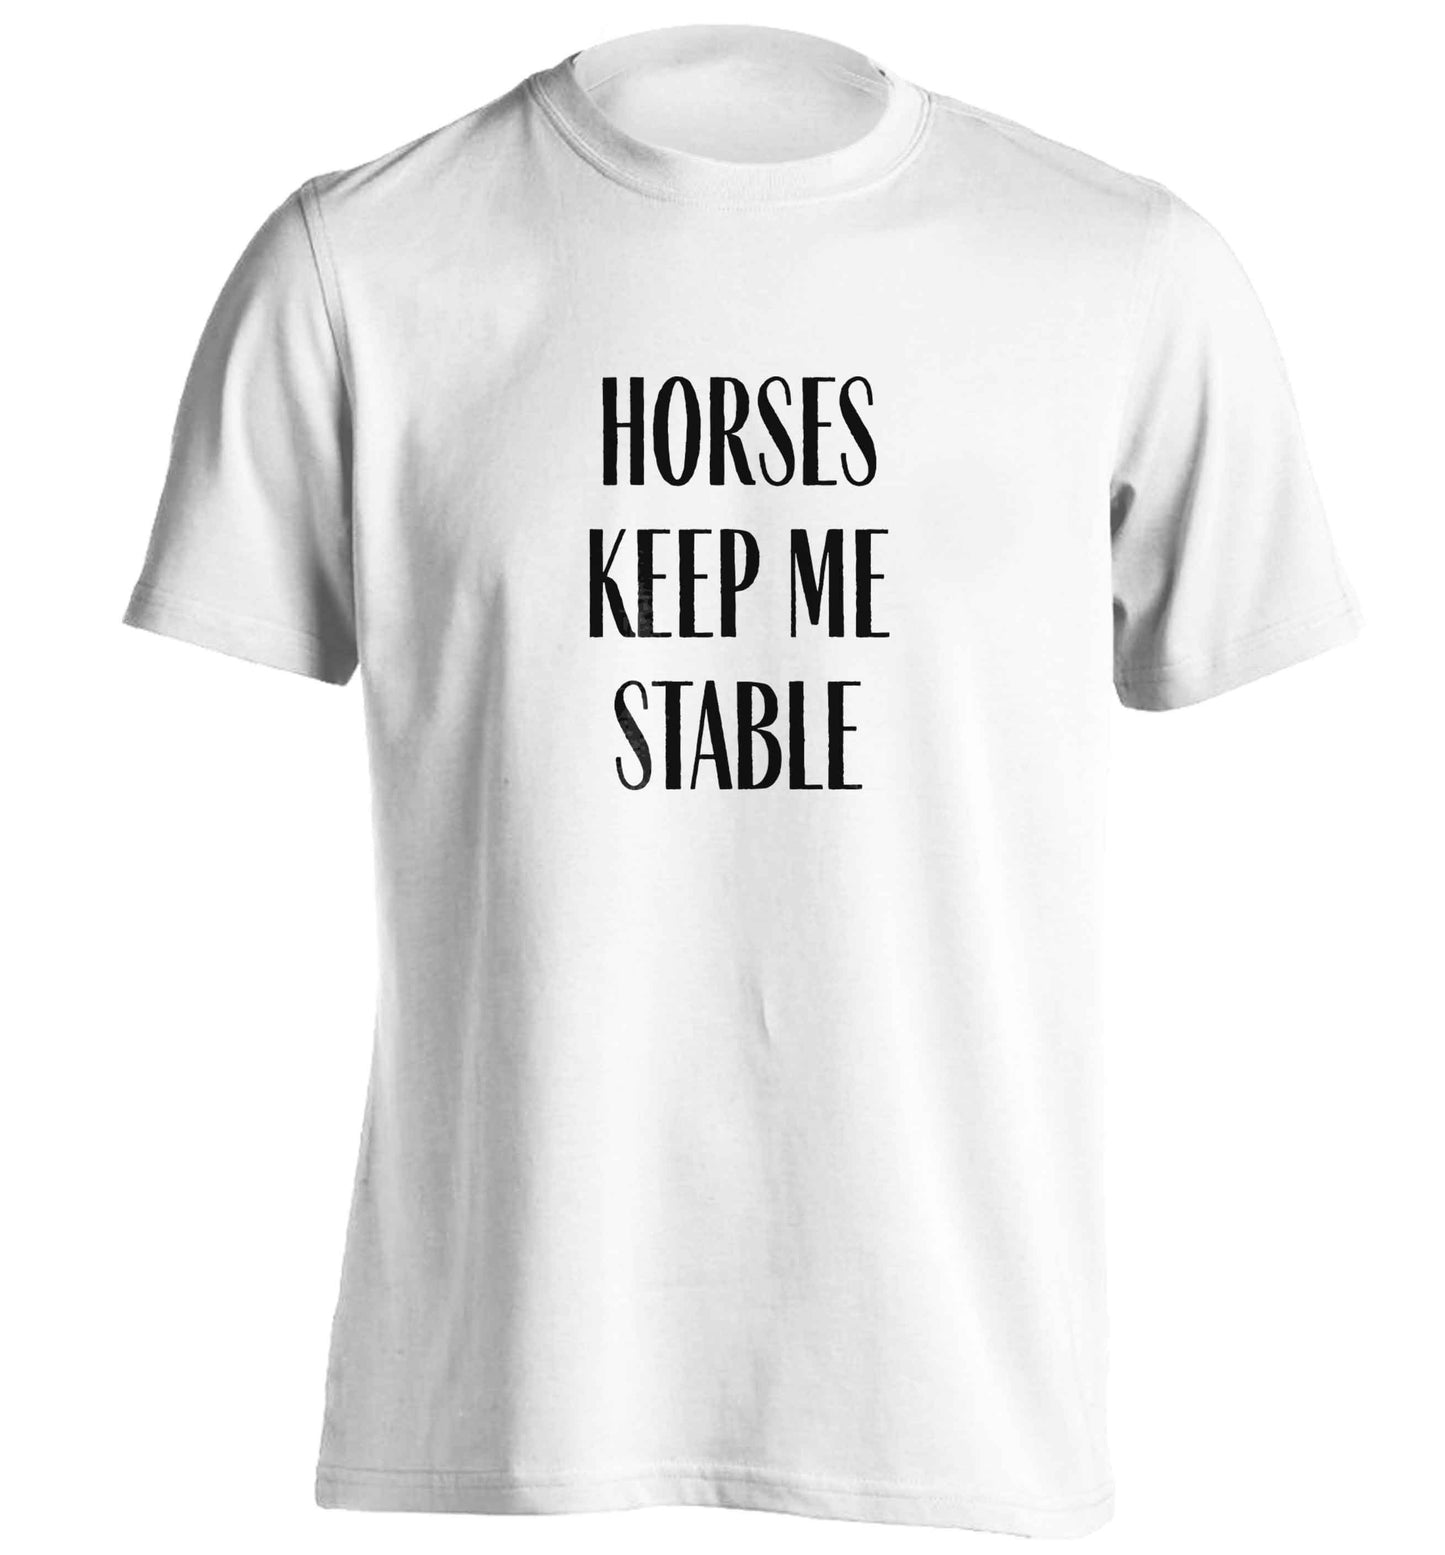 Horses keep me stable adults unisex white Tshirt 2XL